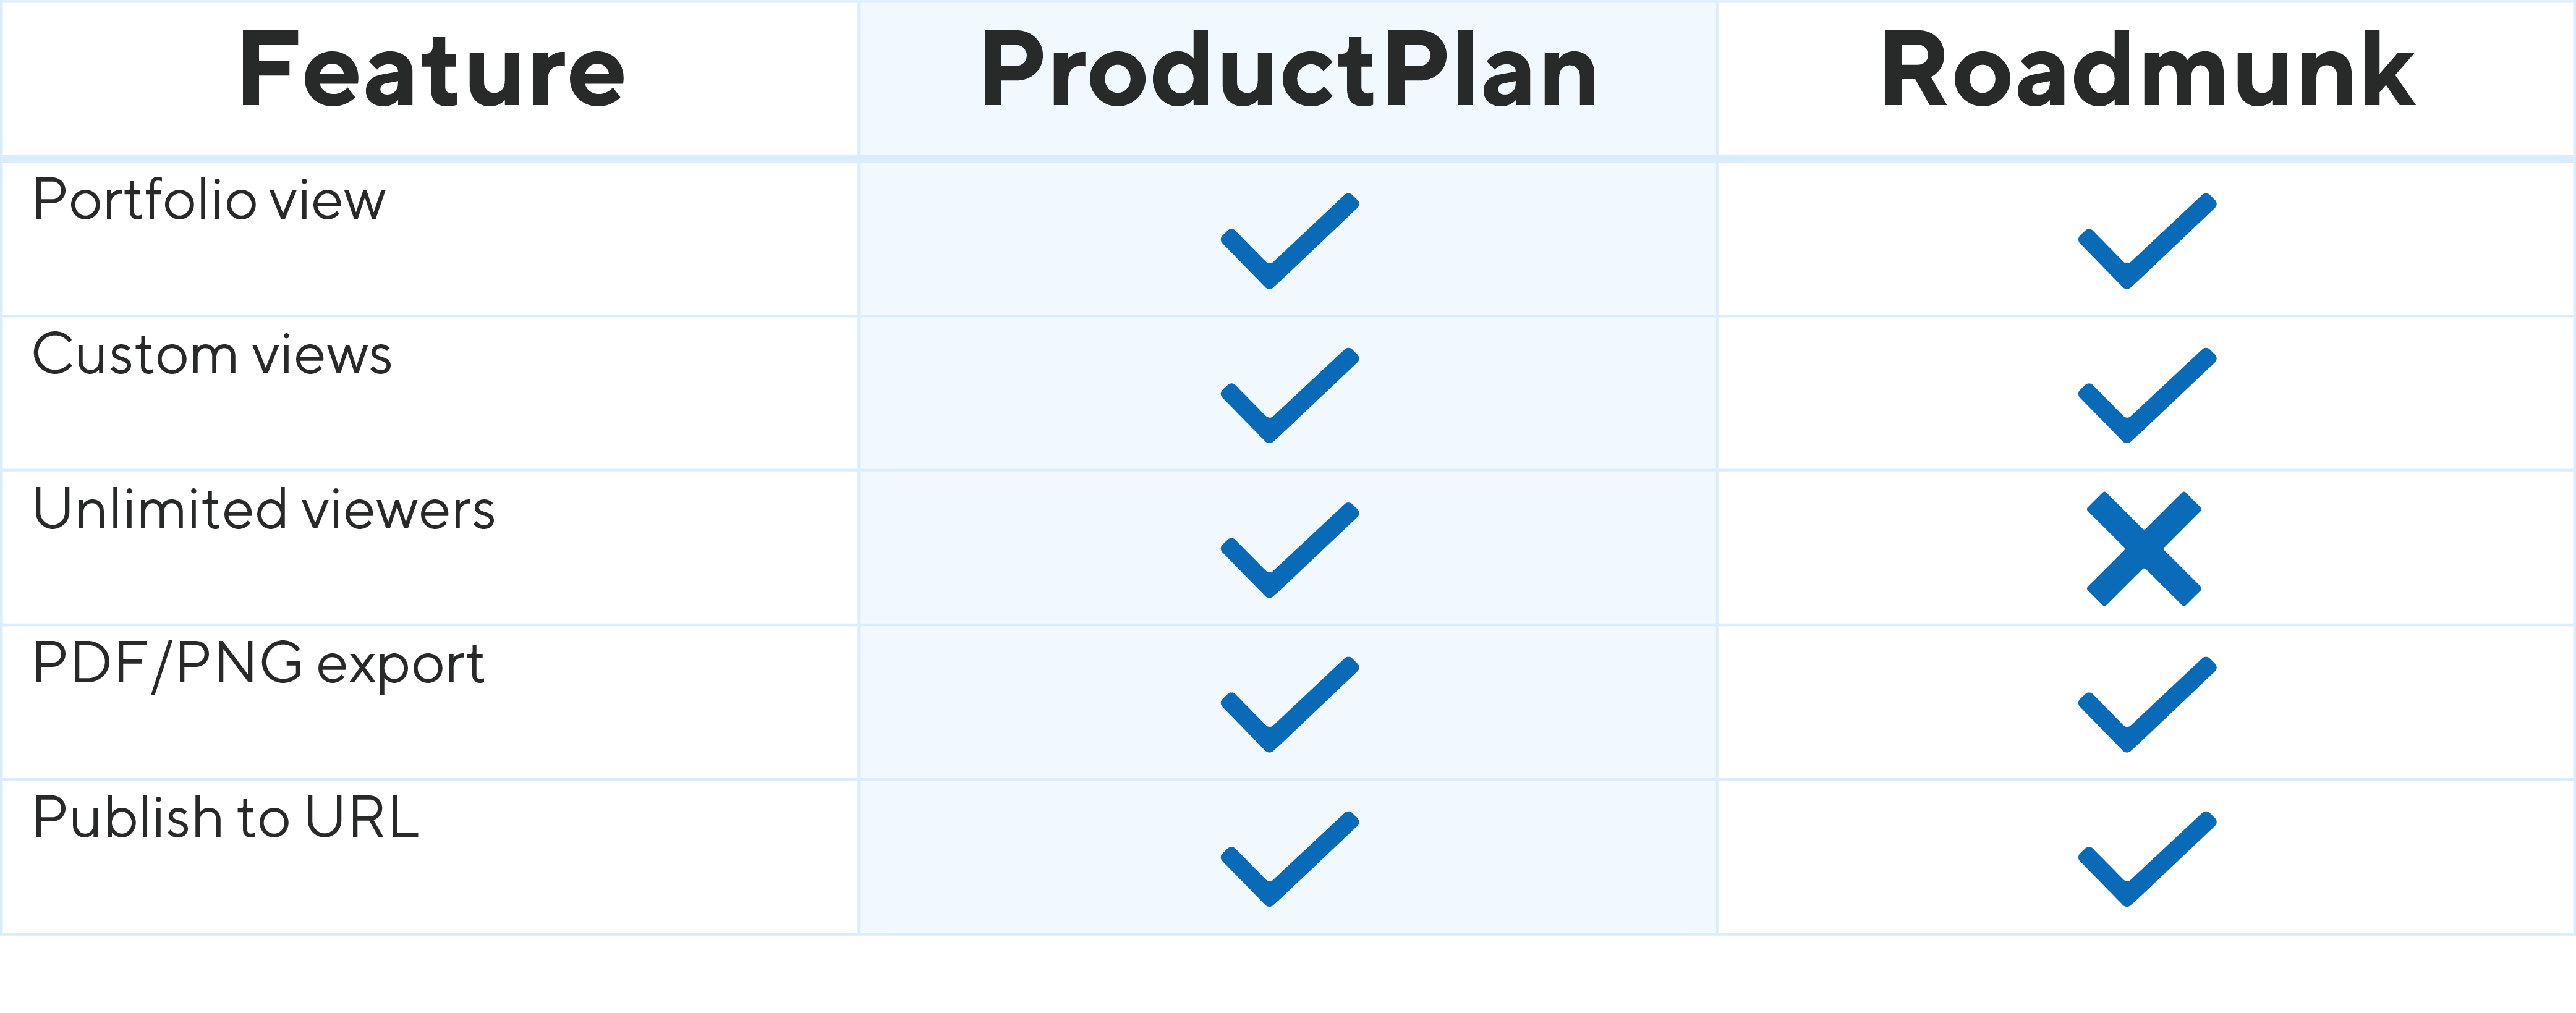 ProductPlan vs Roadmunk Chart 2